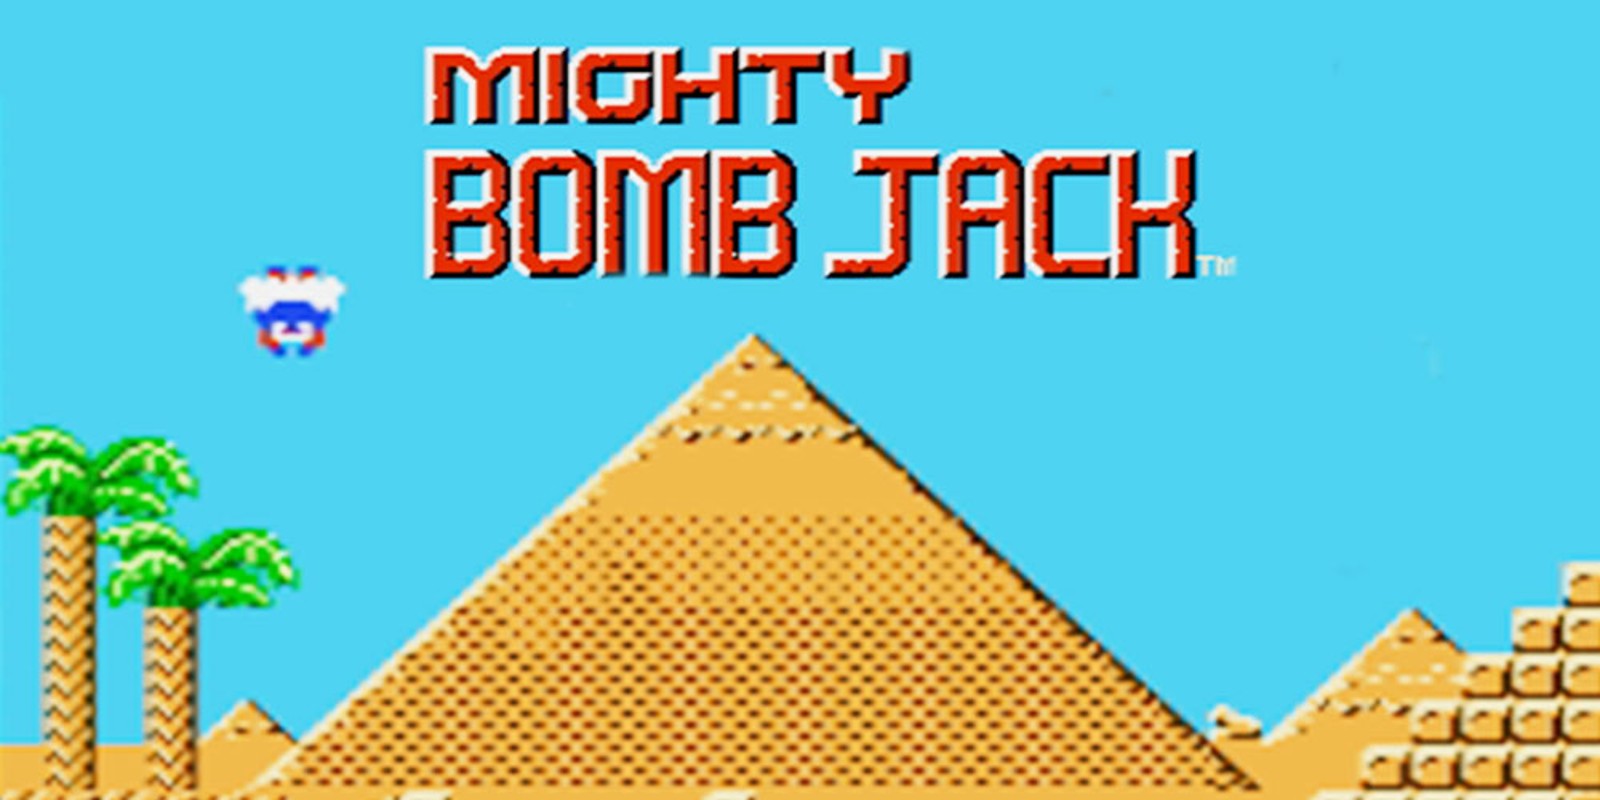 Mighty Bomb Jack™